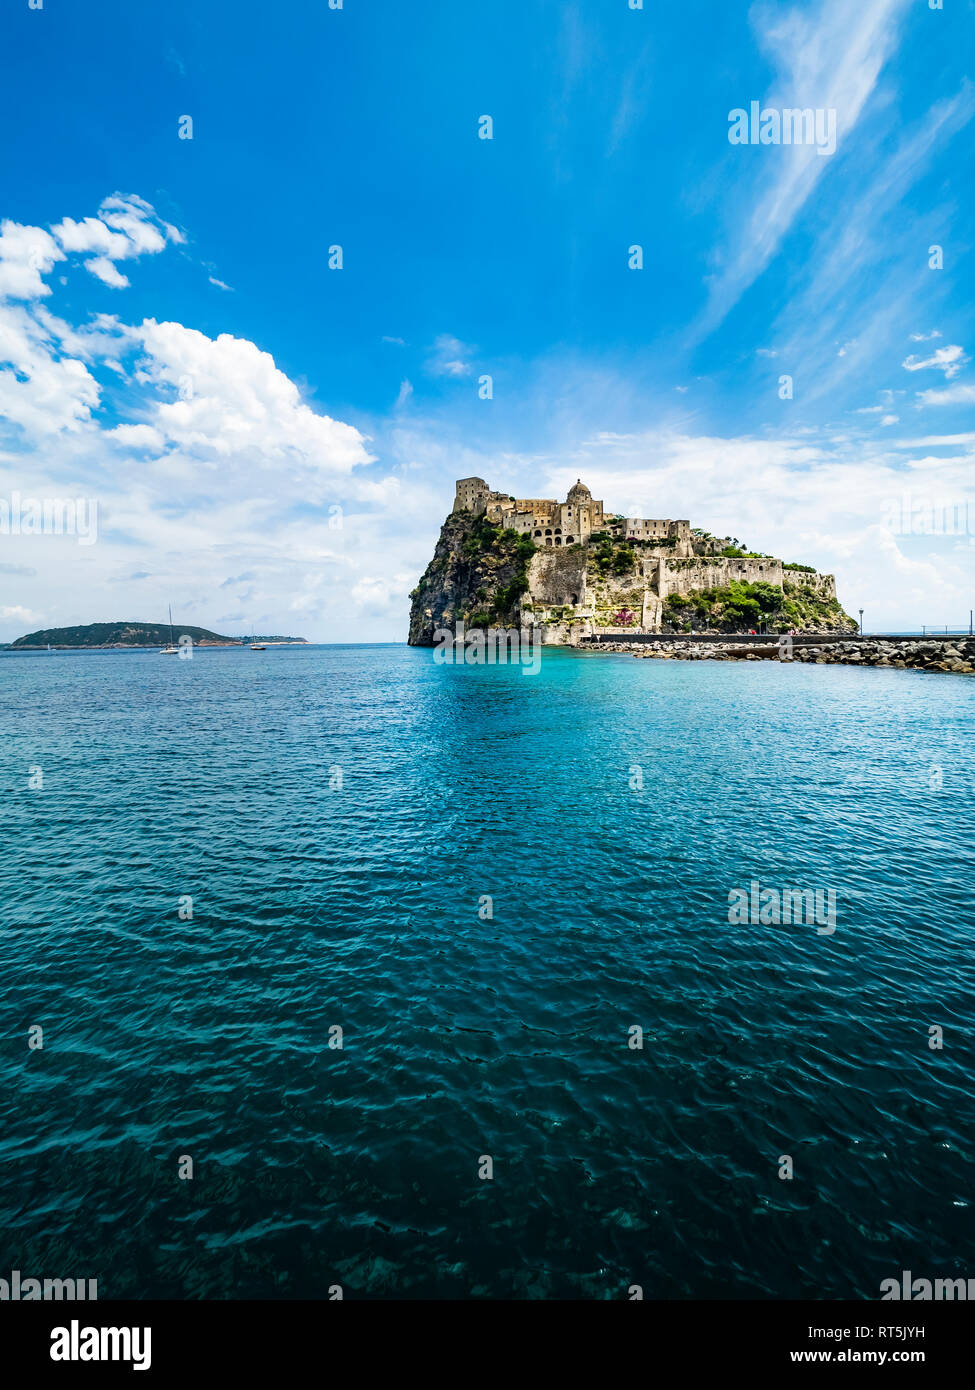 Italy, Campania, Naples, Gulf of Naples, Ischia Island, Castello Aragonese on rock island Stock Photo